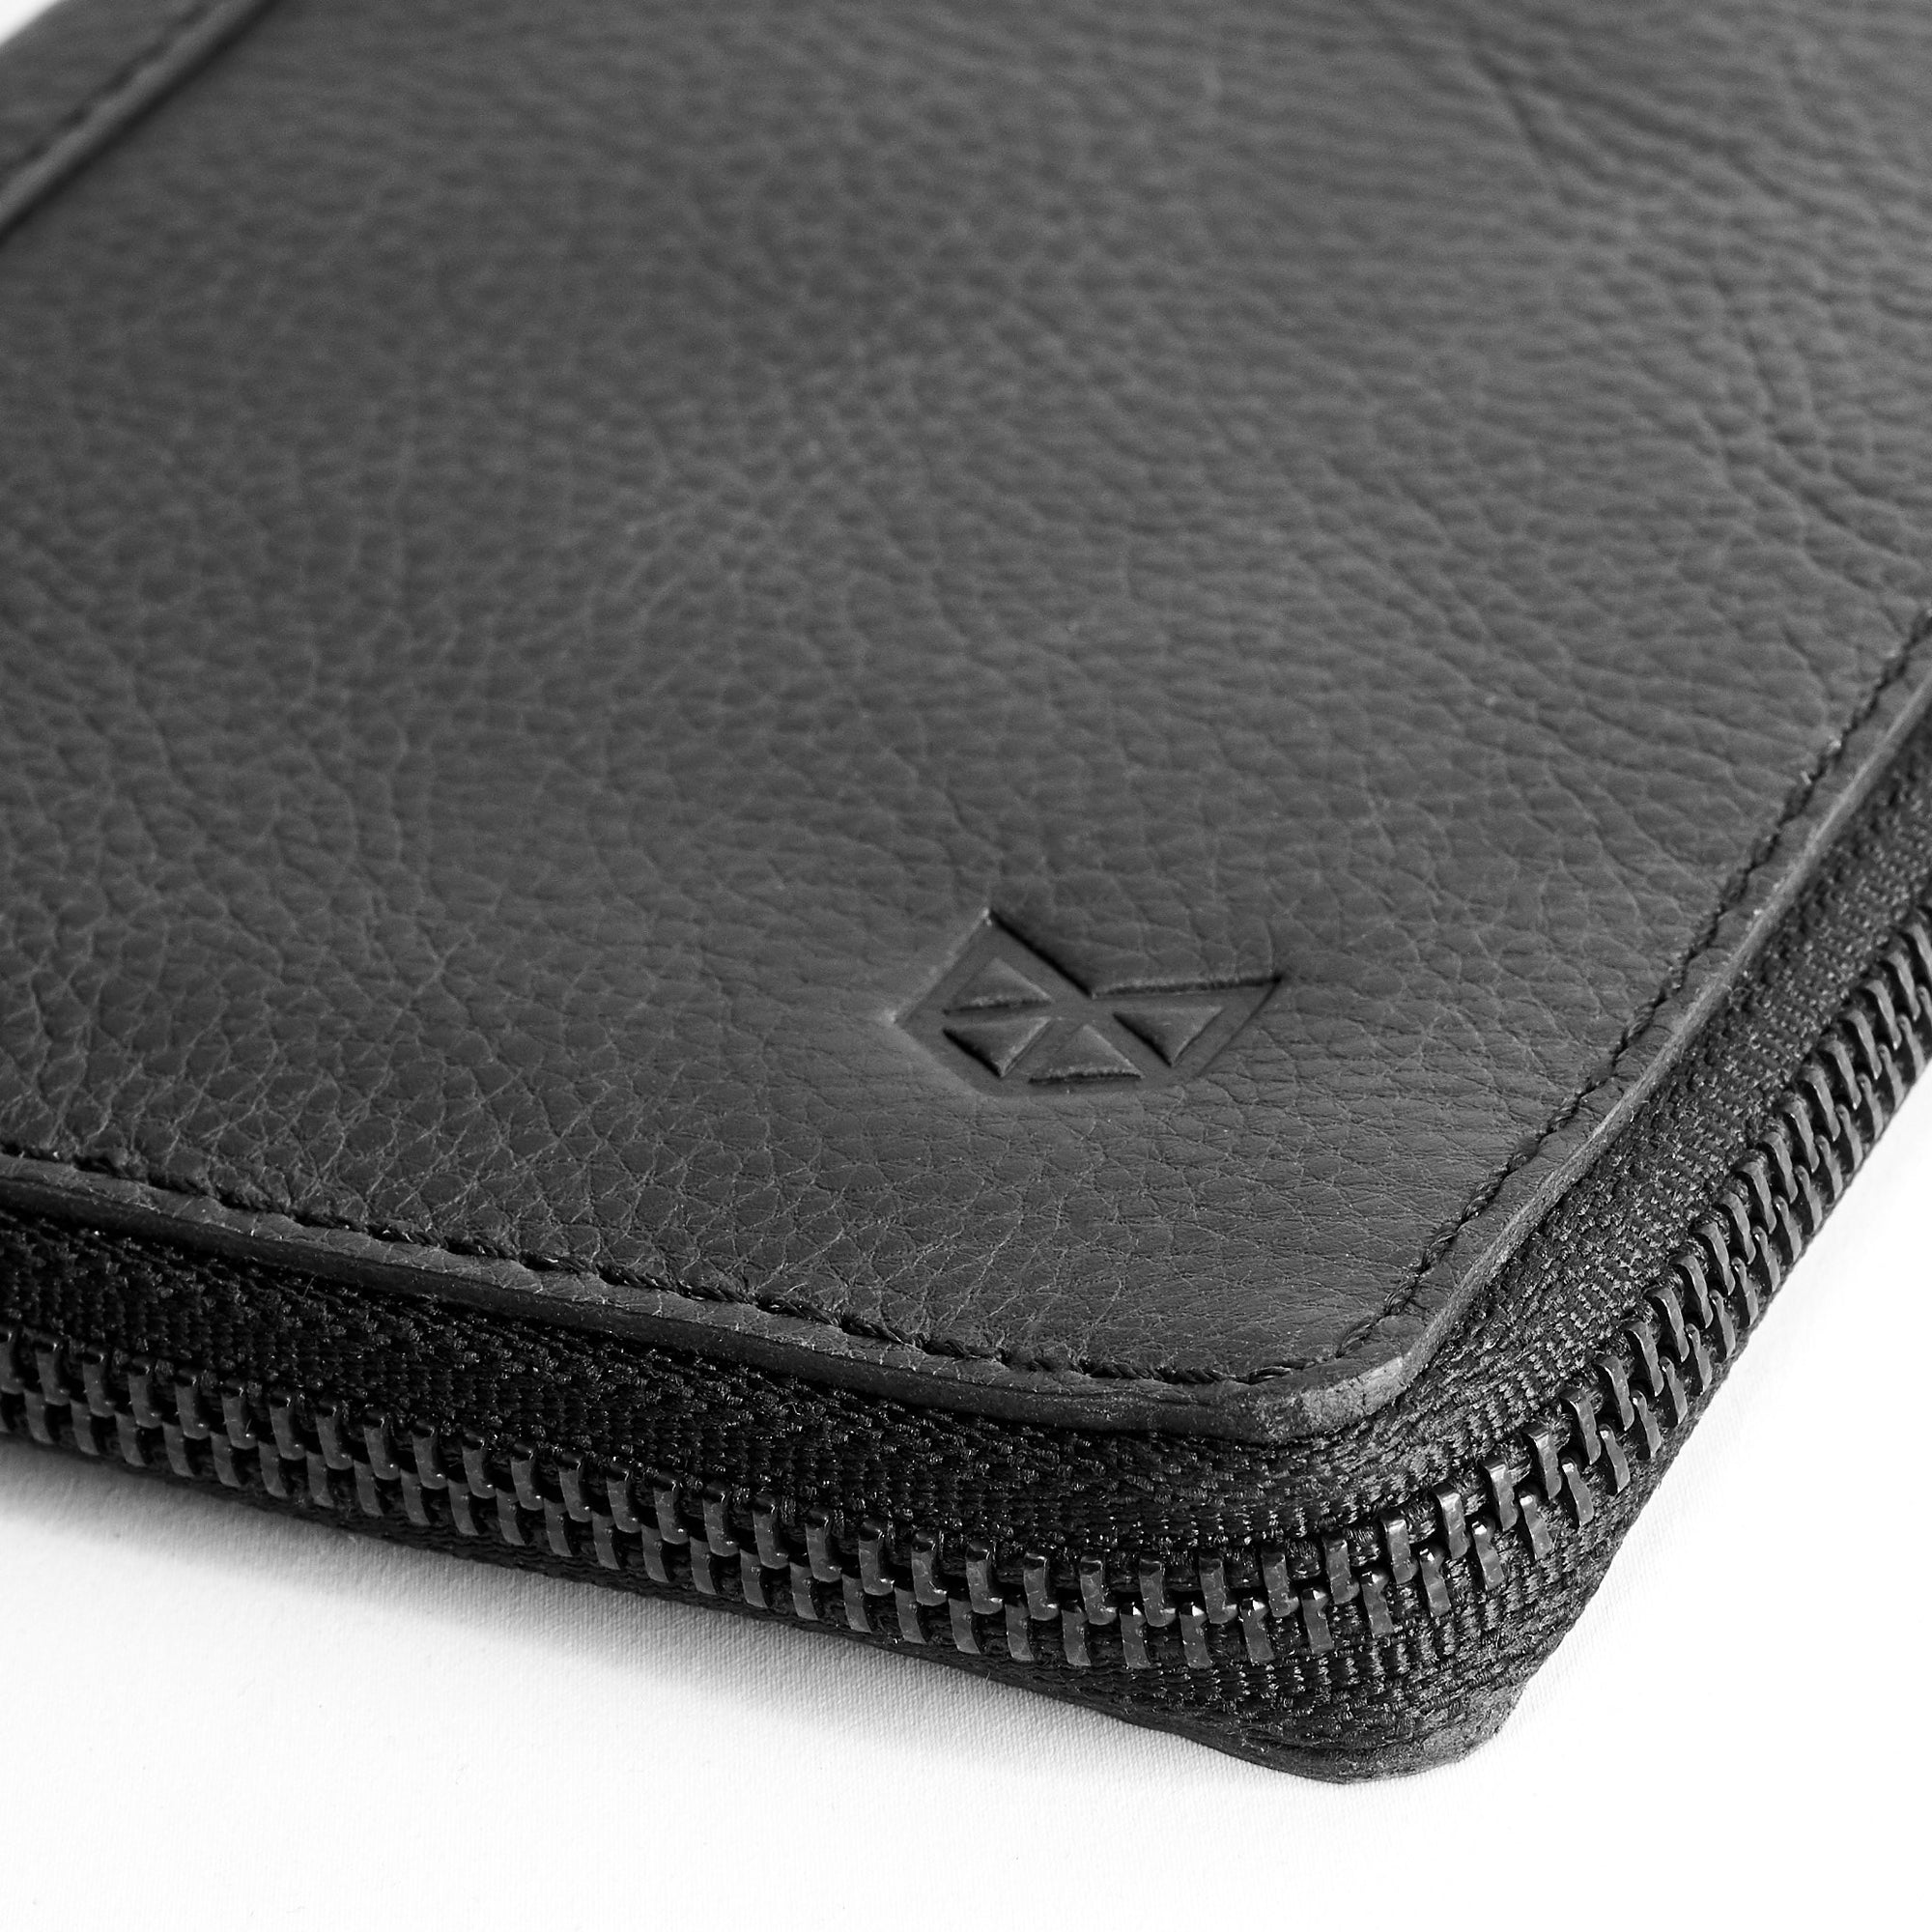 Full grain leather detail. Black Passport Holder for travelers, document organizer, travel journal by Capra Leather